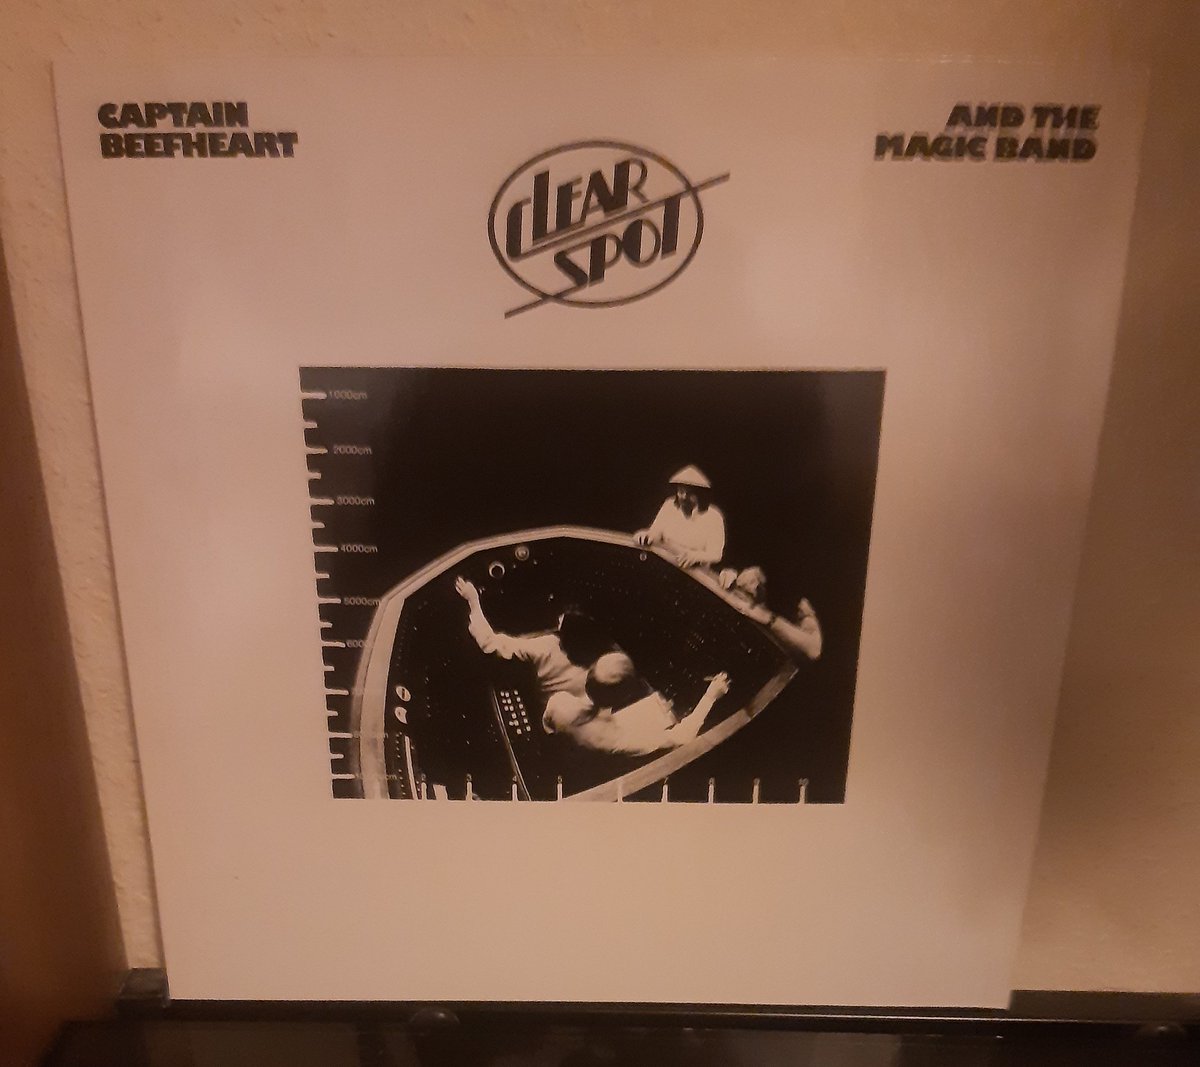 #heavyrotation no.68, 1972: Captain Beefheart and The Magic Band = Clear Spot (Reprise/WB K 54 007) #nowspinning #vinyl #vinylcommunity #vinyladdict #recordcollection #vinylrecords
#CaptainBeefheart #Beefheart